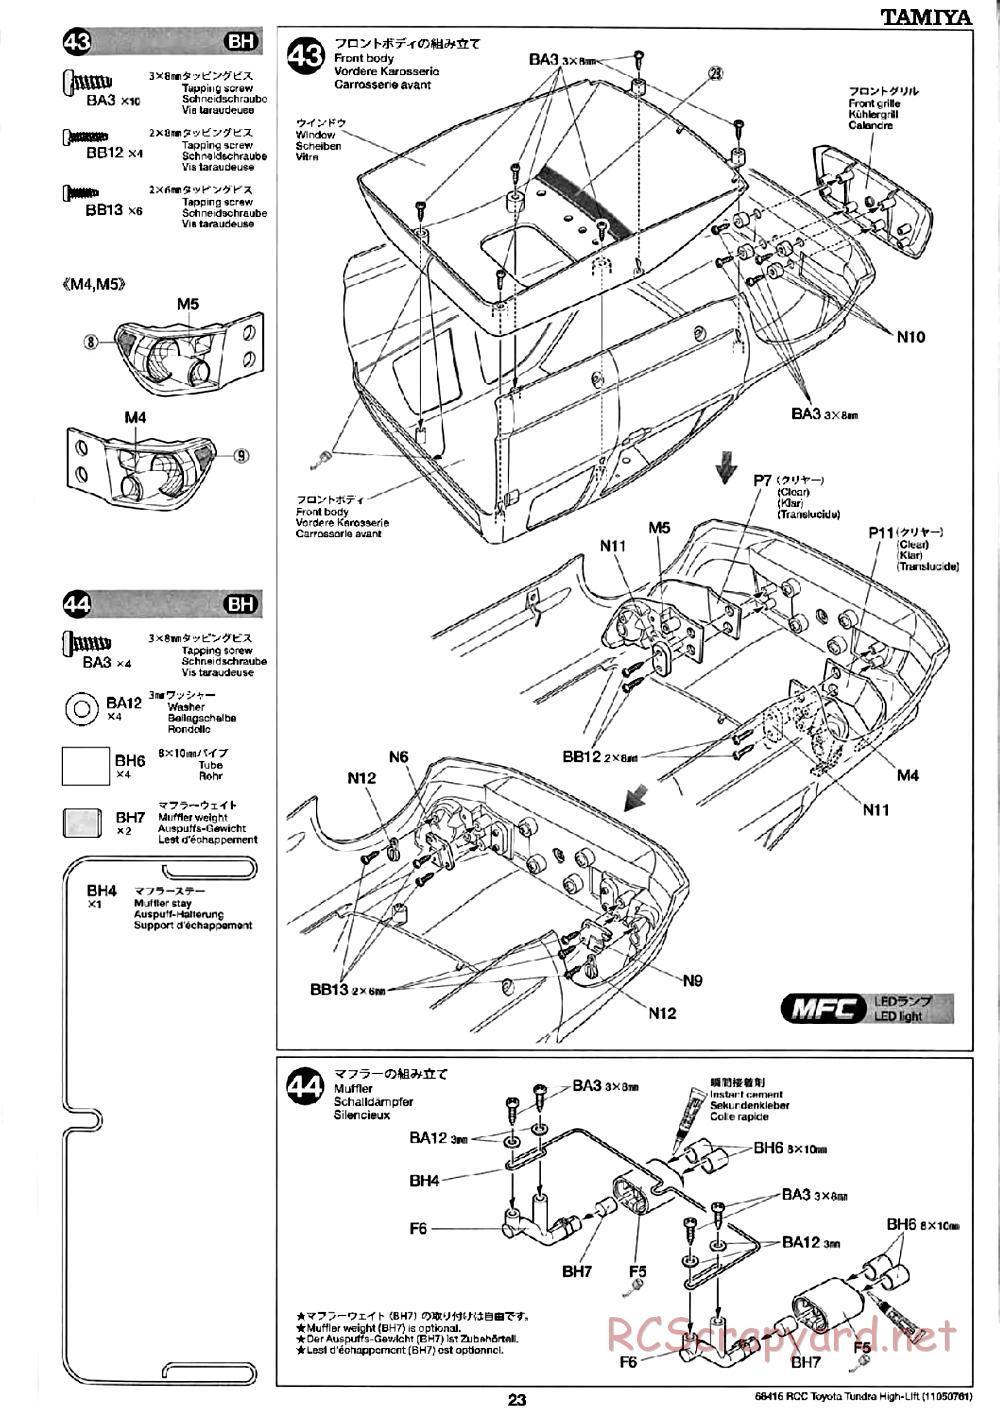 Tamiya - Toyota Tundra High-Lift Chassis - Manual - Page 23